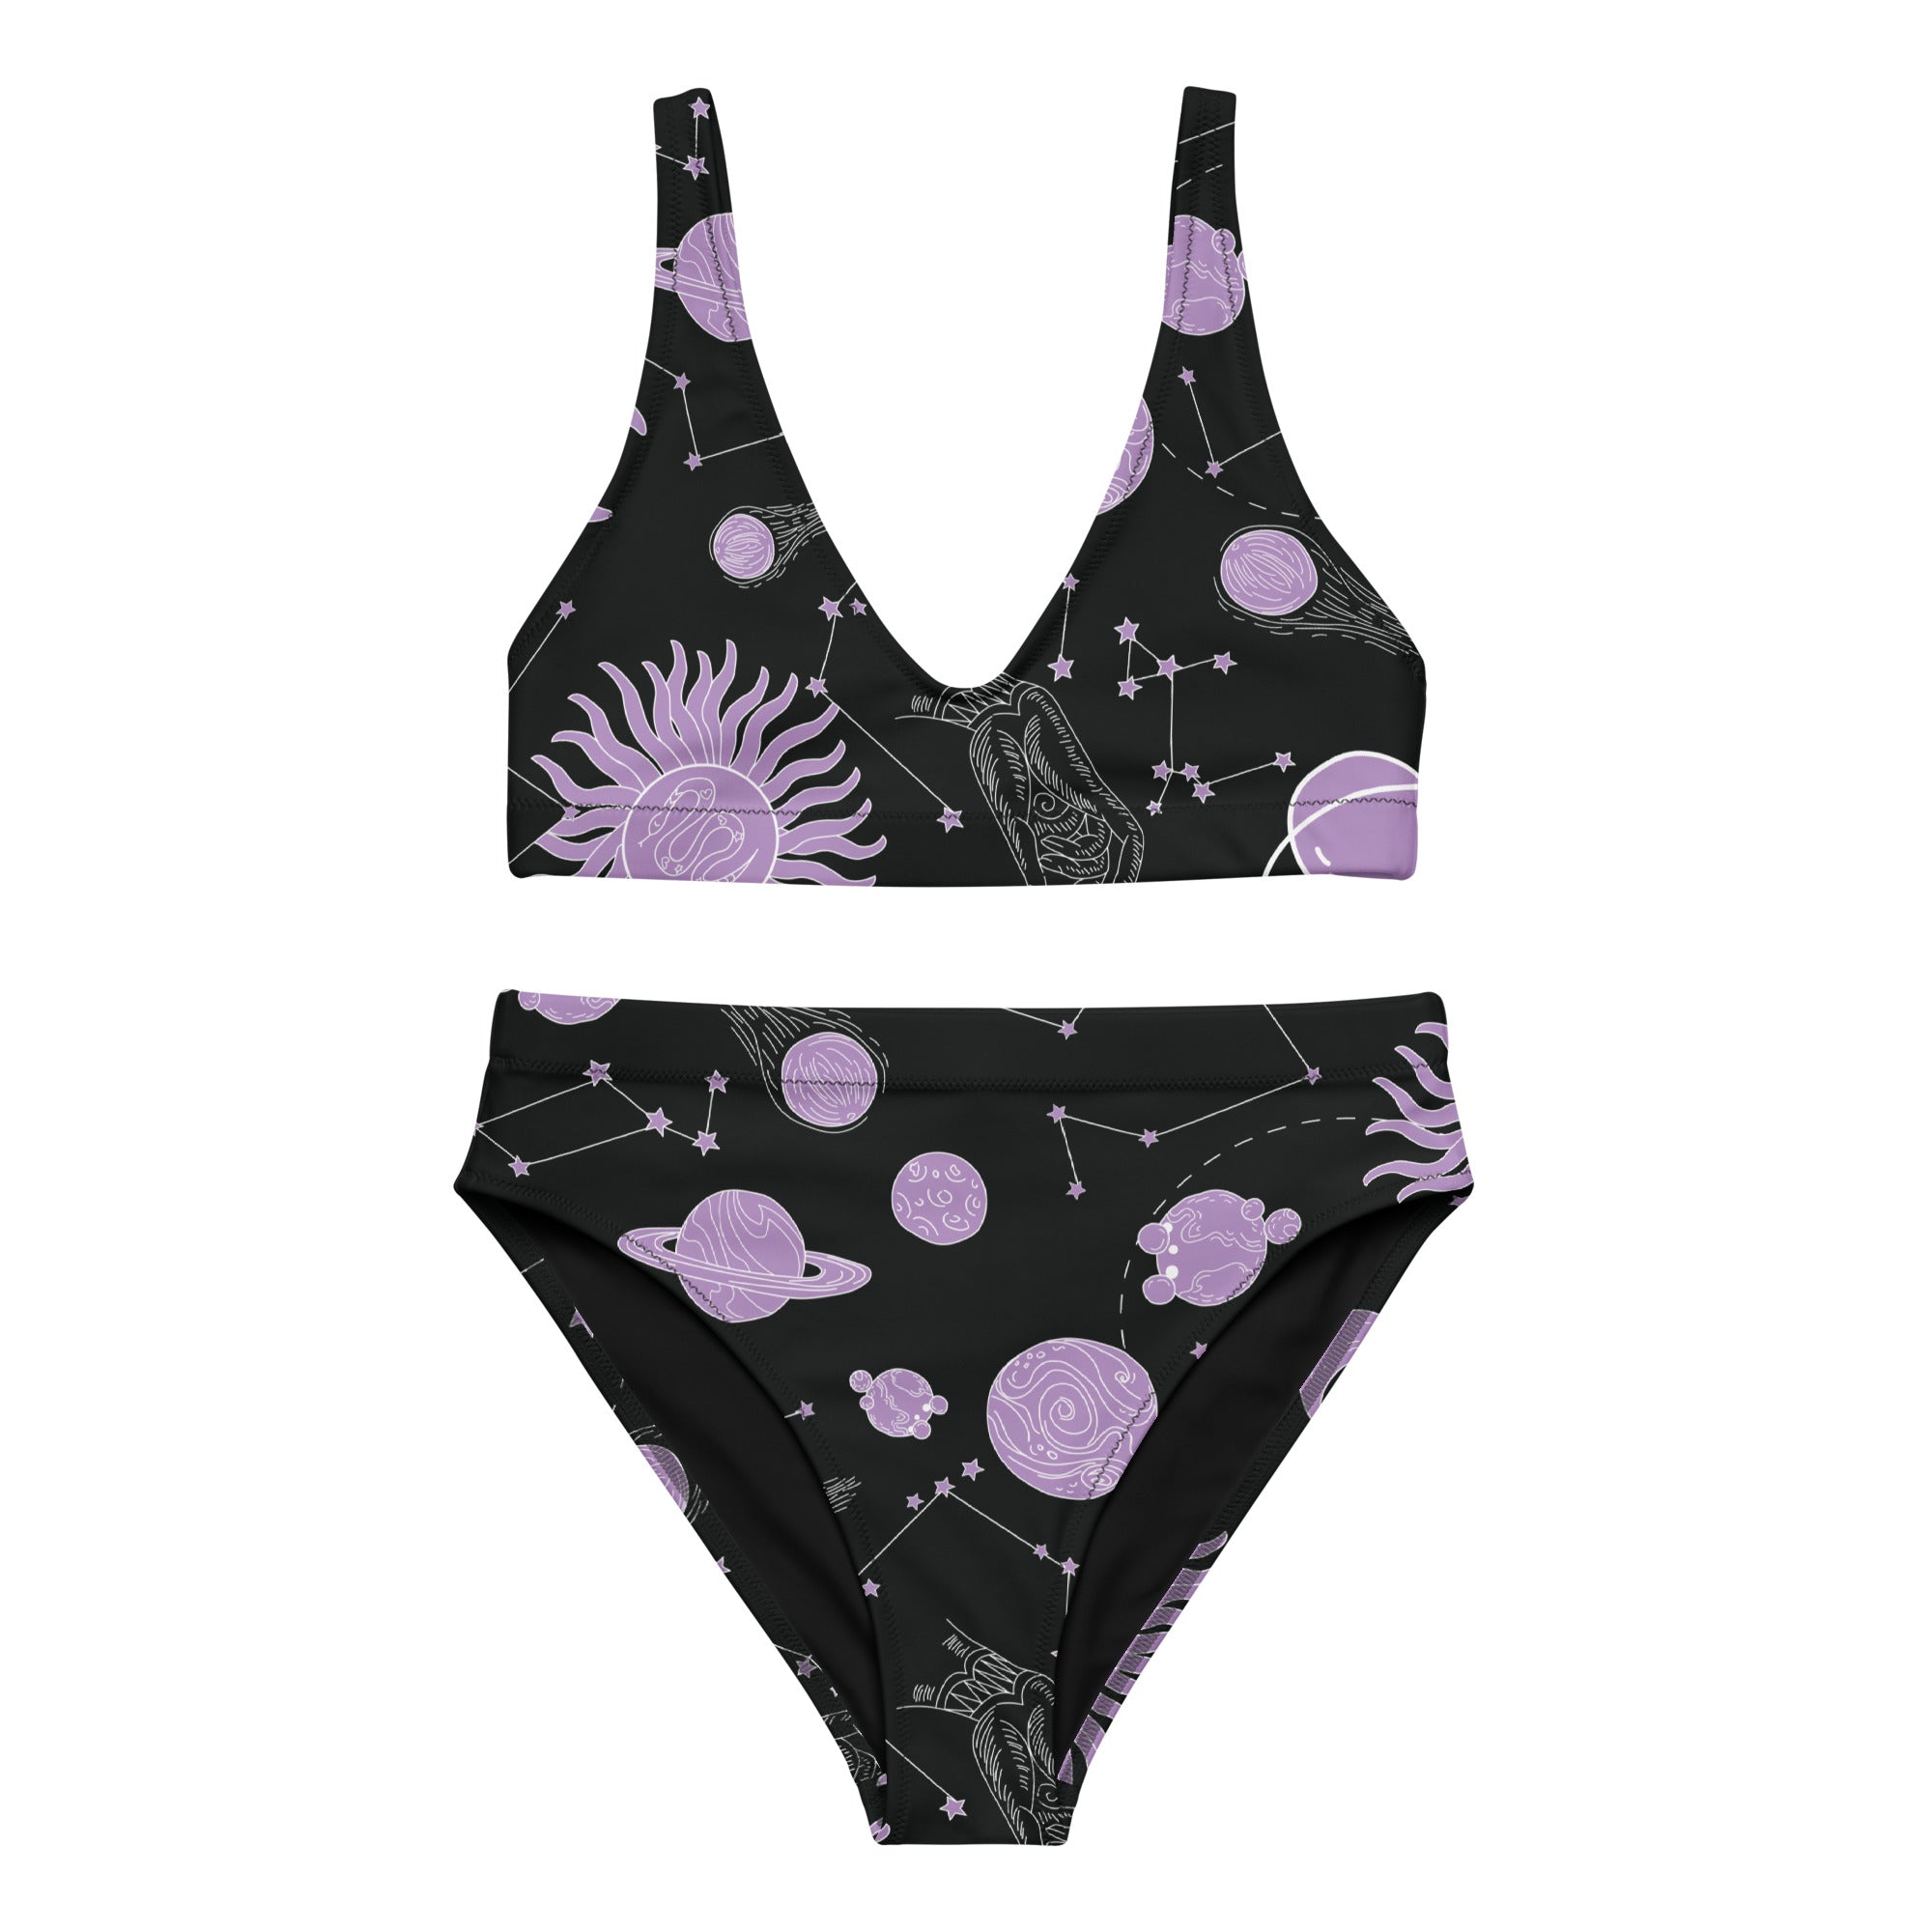 Cosmic Crush Constellation High Waisted Recycled Bikini